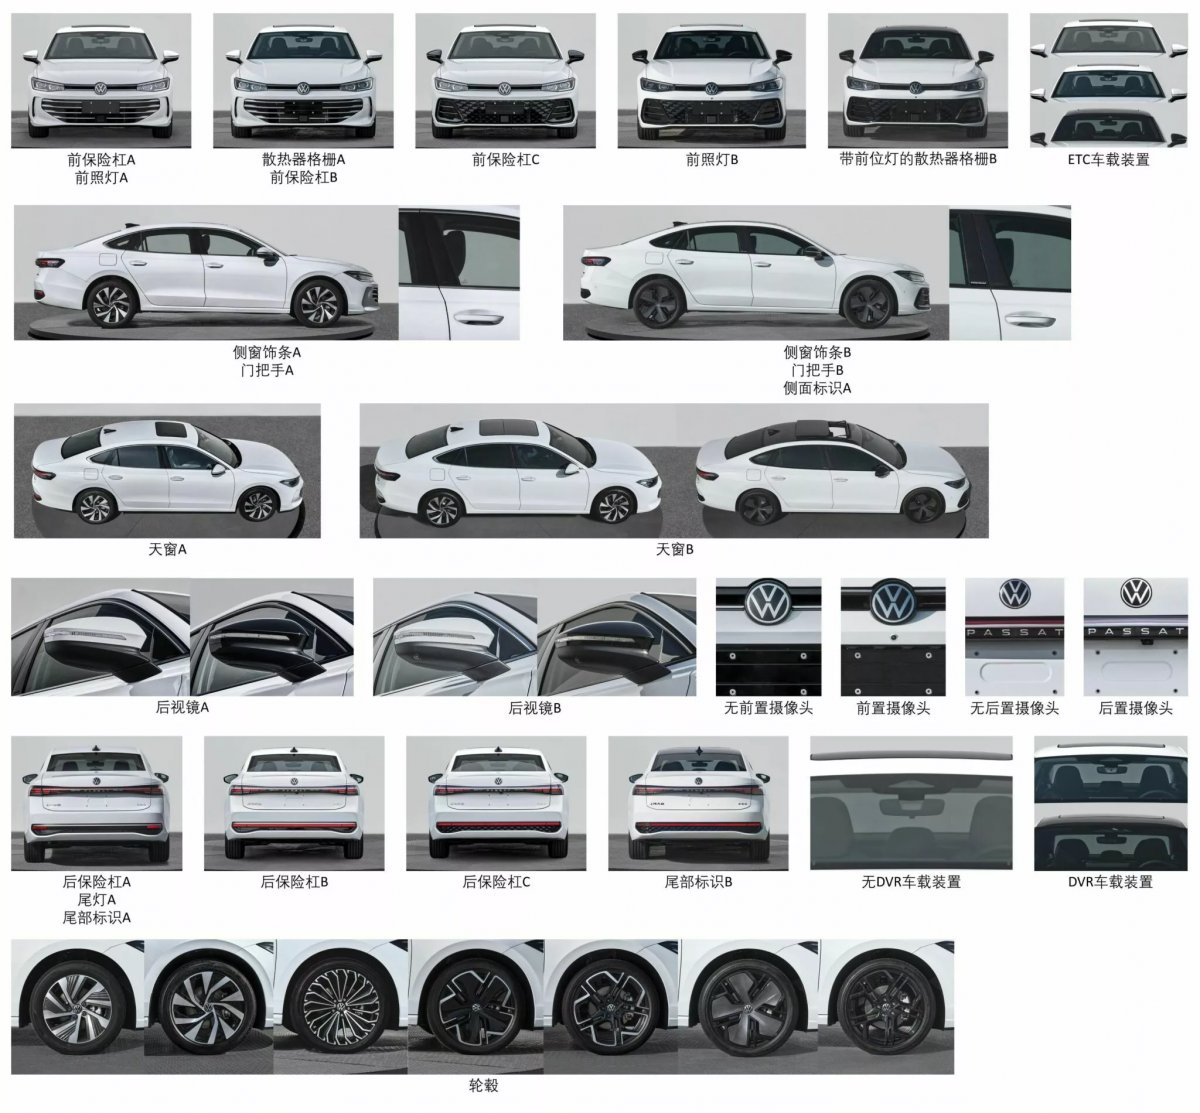 [Volkswagen Passat de nova geração tem fotos vazadas na China]